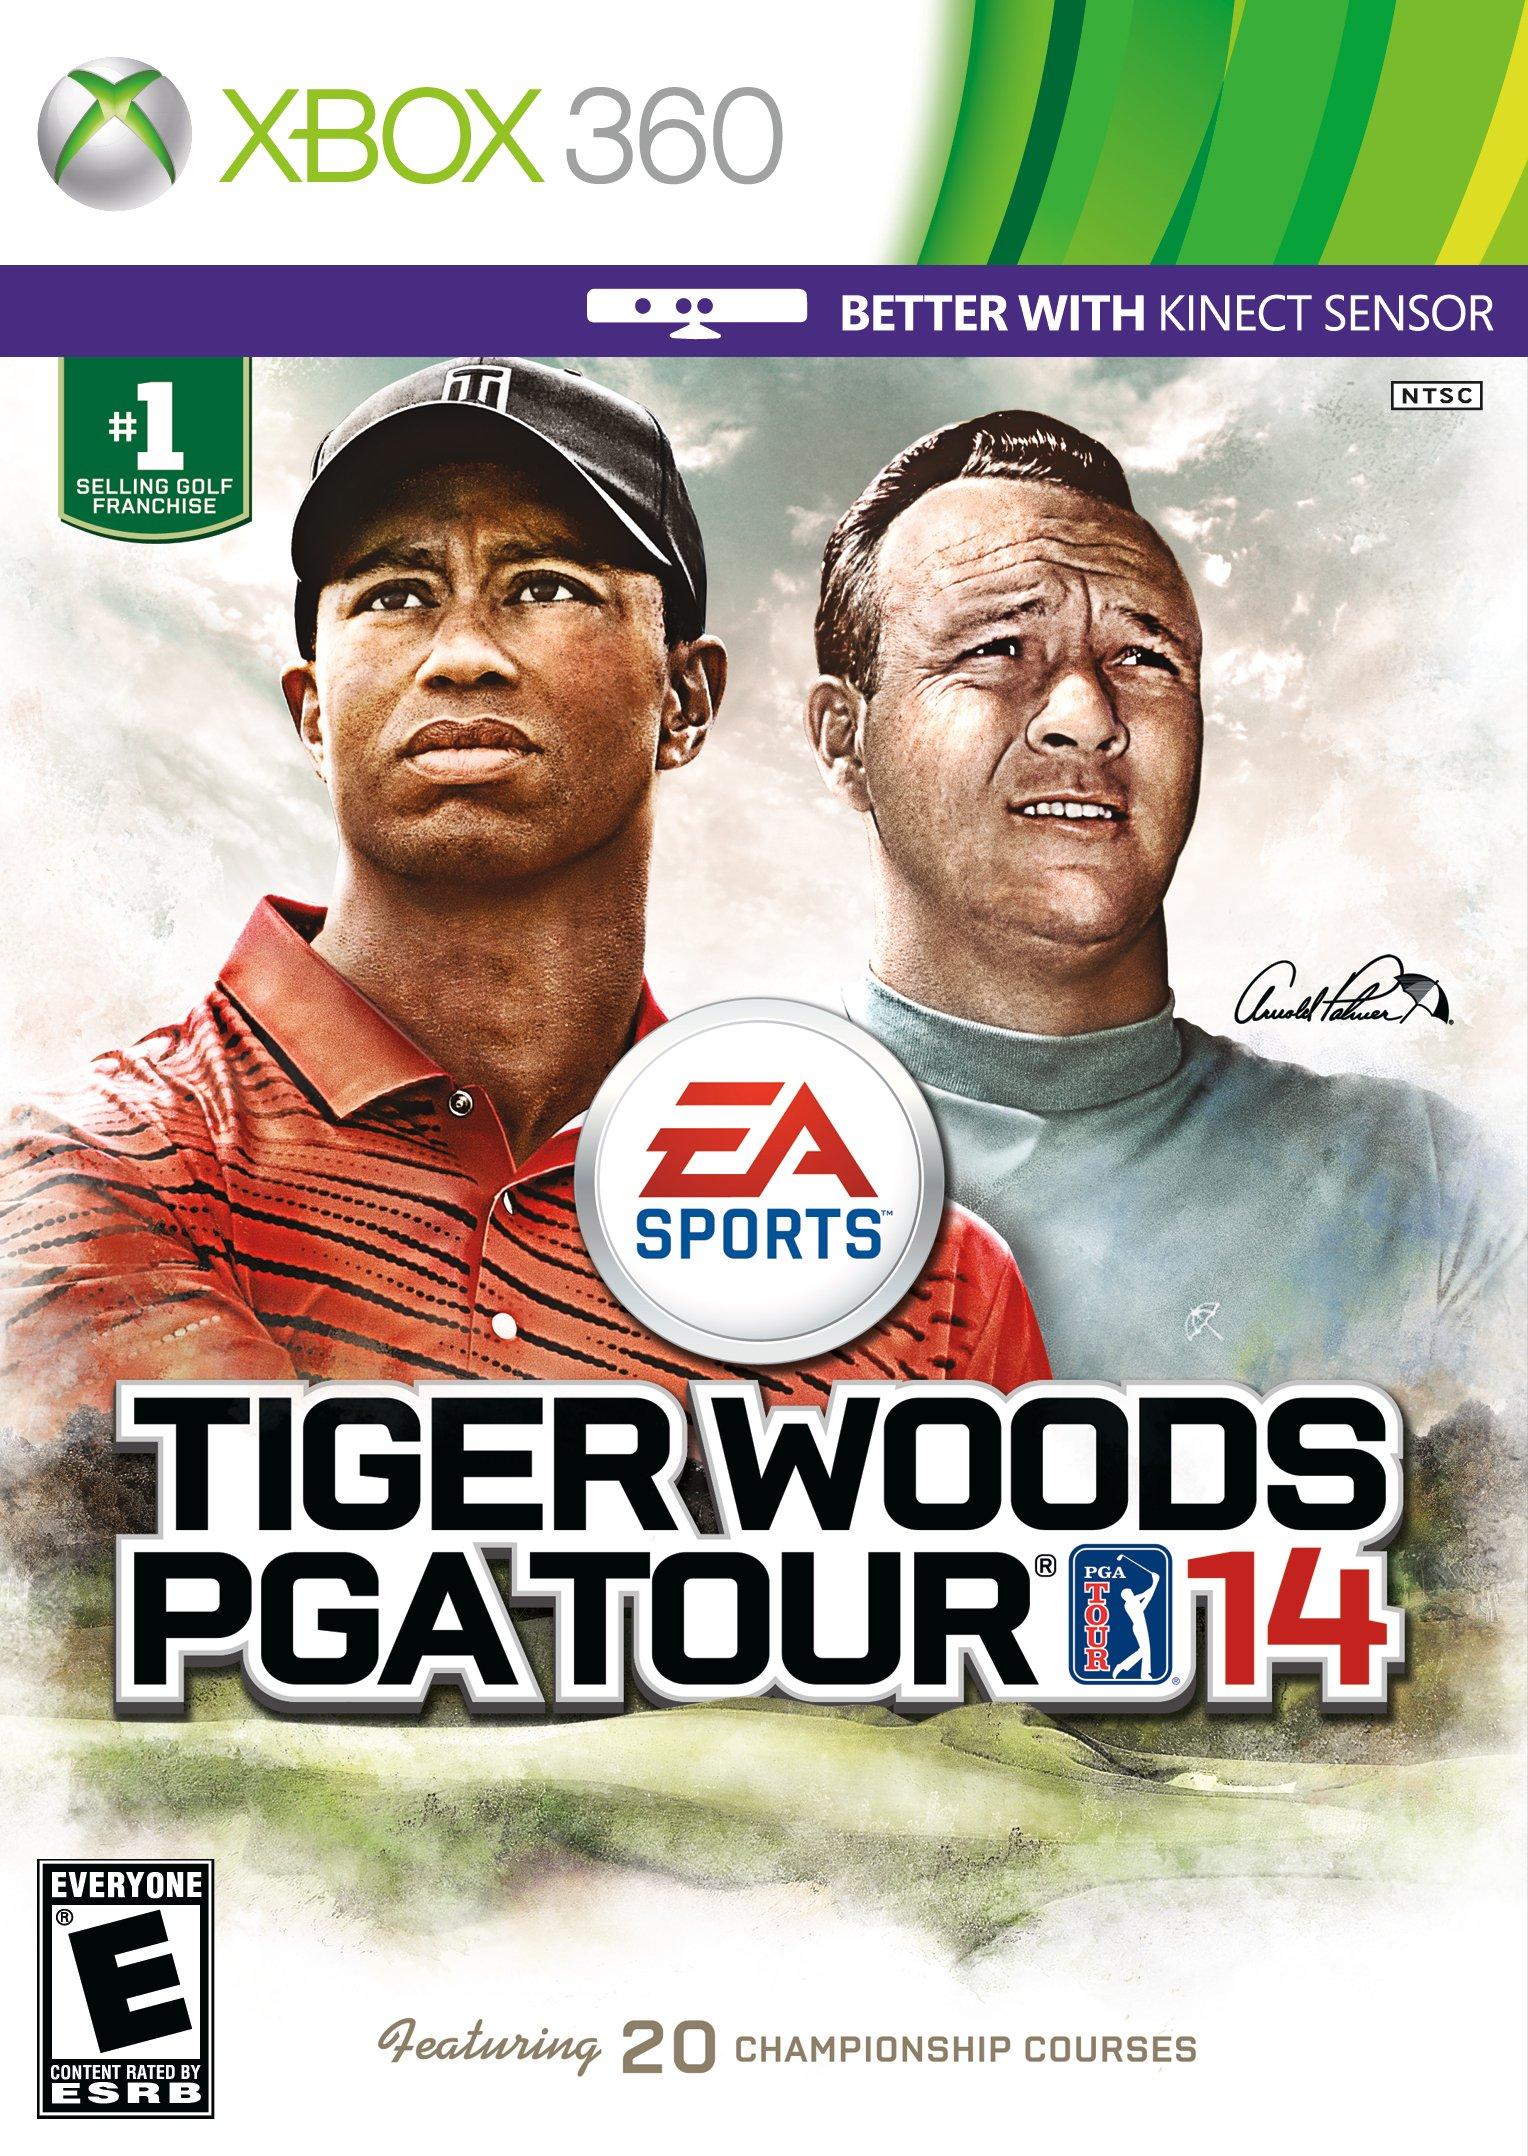 Check Out Tiger Woods Brand New Pga Tour 08 Pc Game Https Www Ebay Com Au Itm 162931477342via Ebay Only 12 50 The Blue Cow Pga Tour Tiger Woods Pga